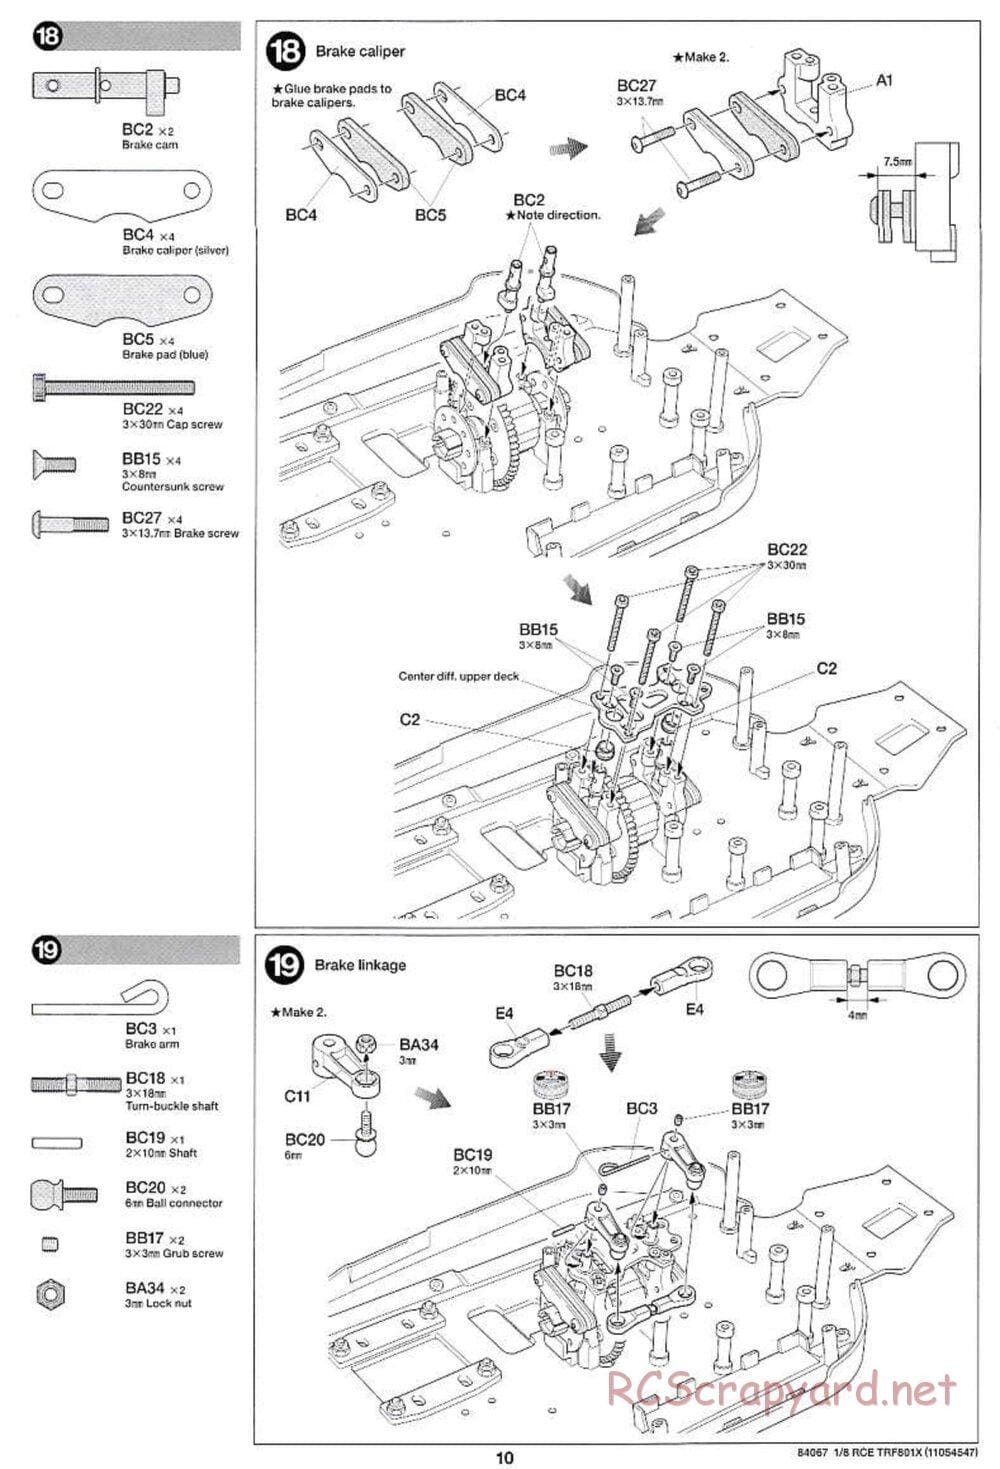 Tamiya - TRF801X Chassis - Manual - Page 10